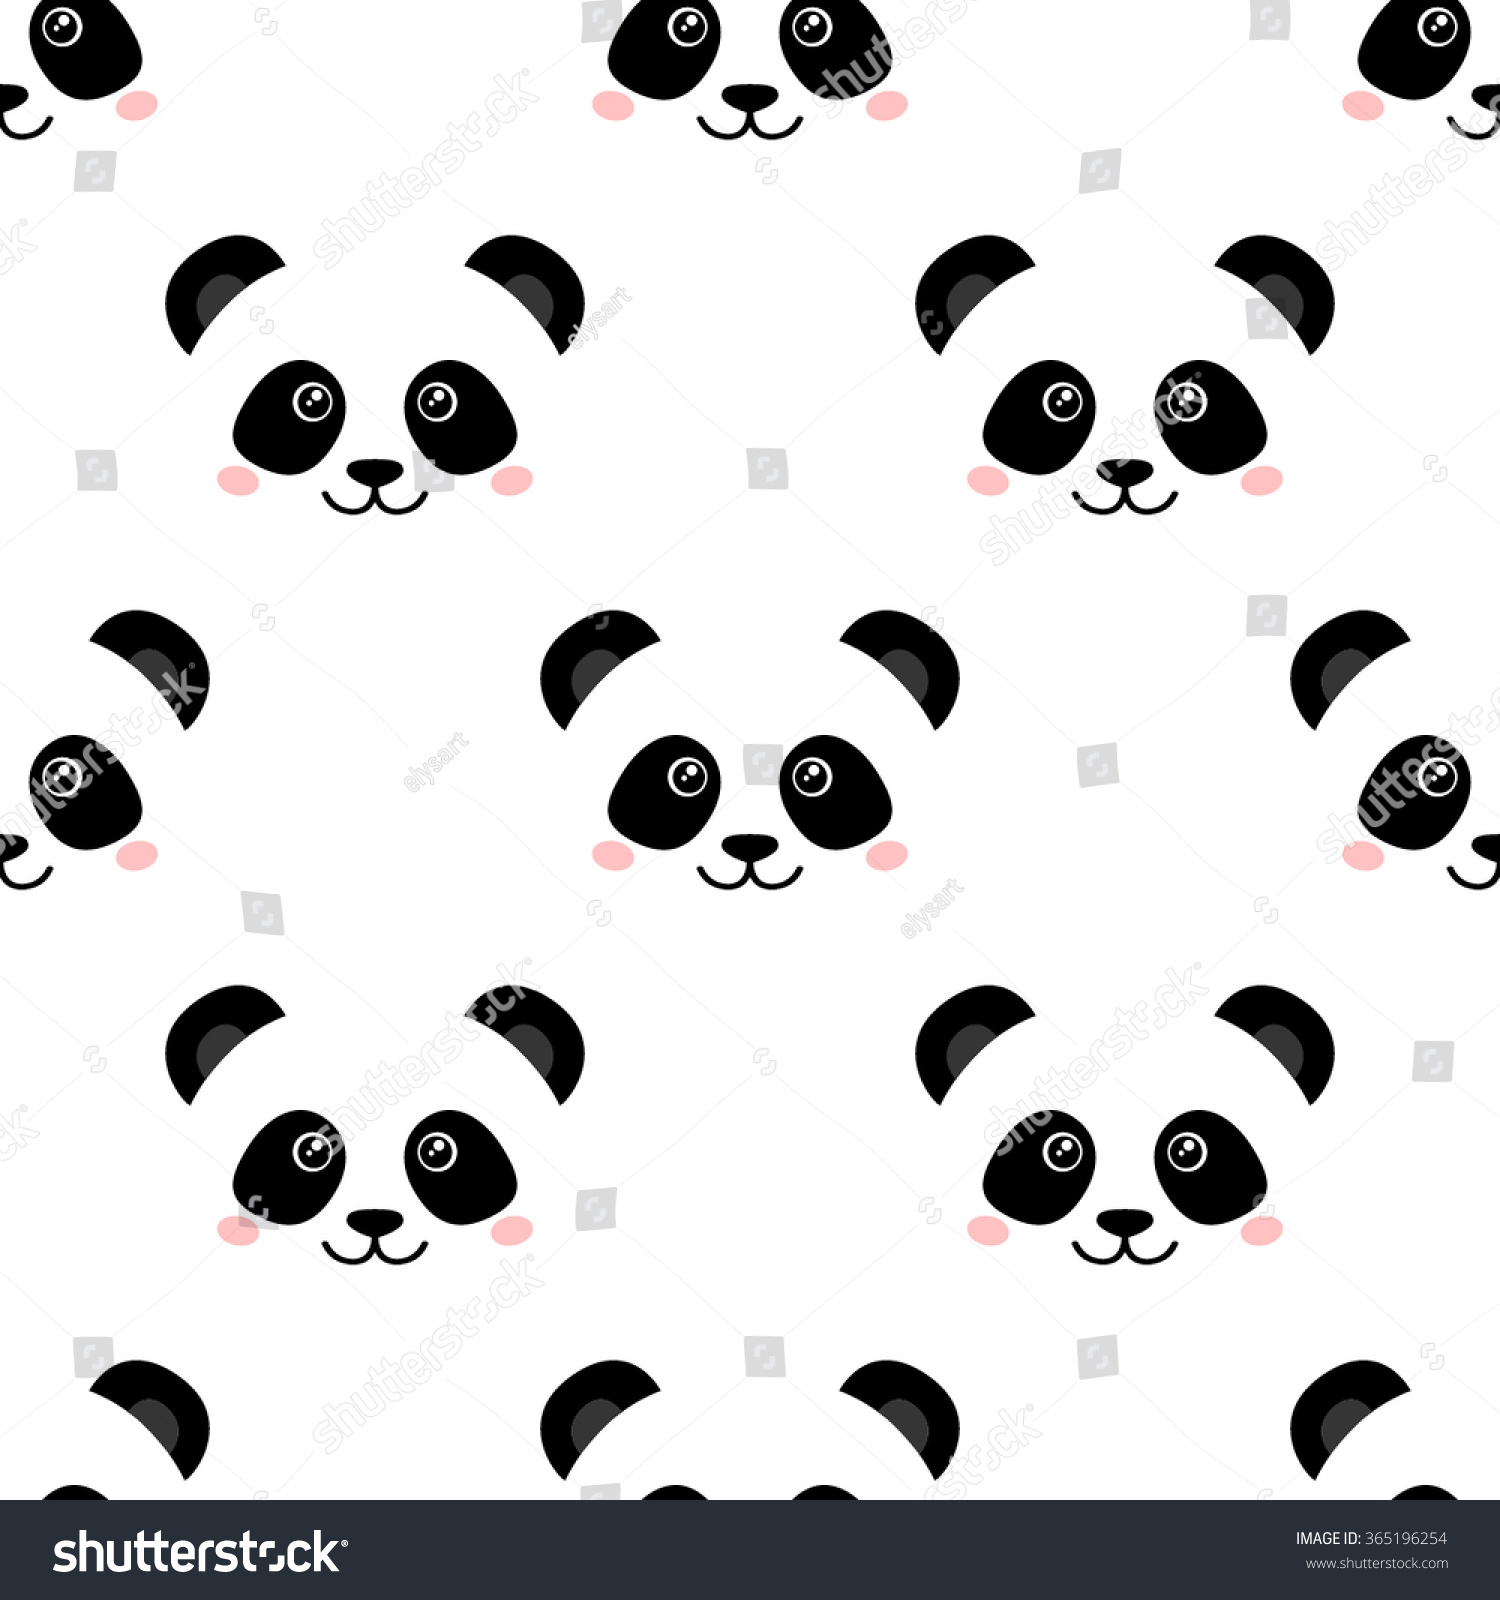 Cute Panda Face Seamless Wallpaper Stock Vector Royalty